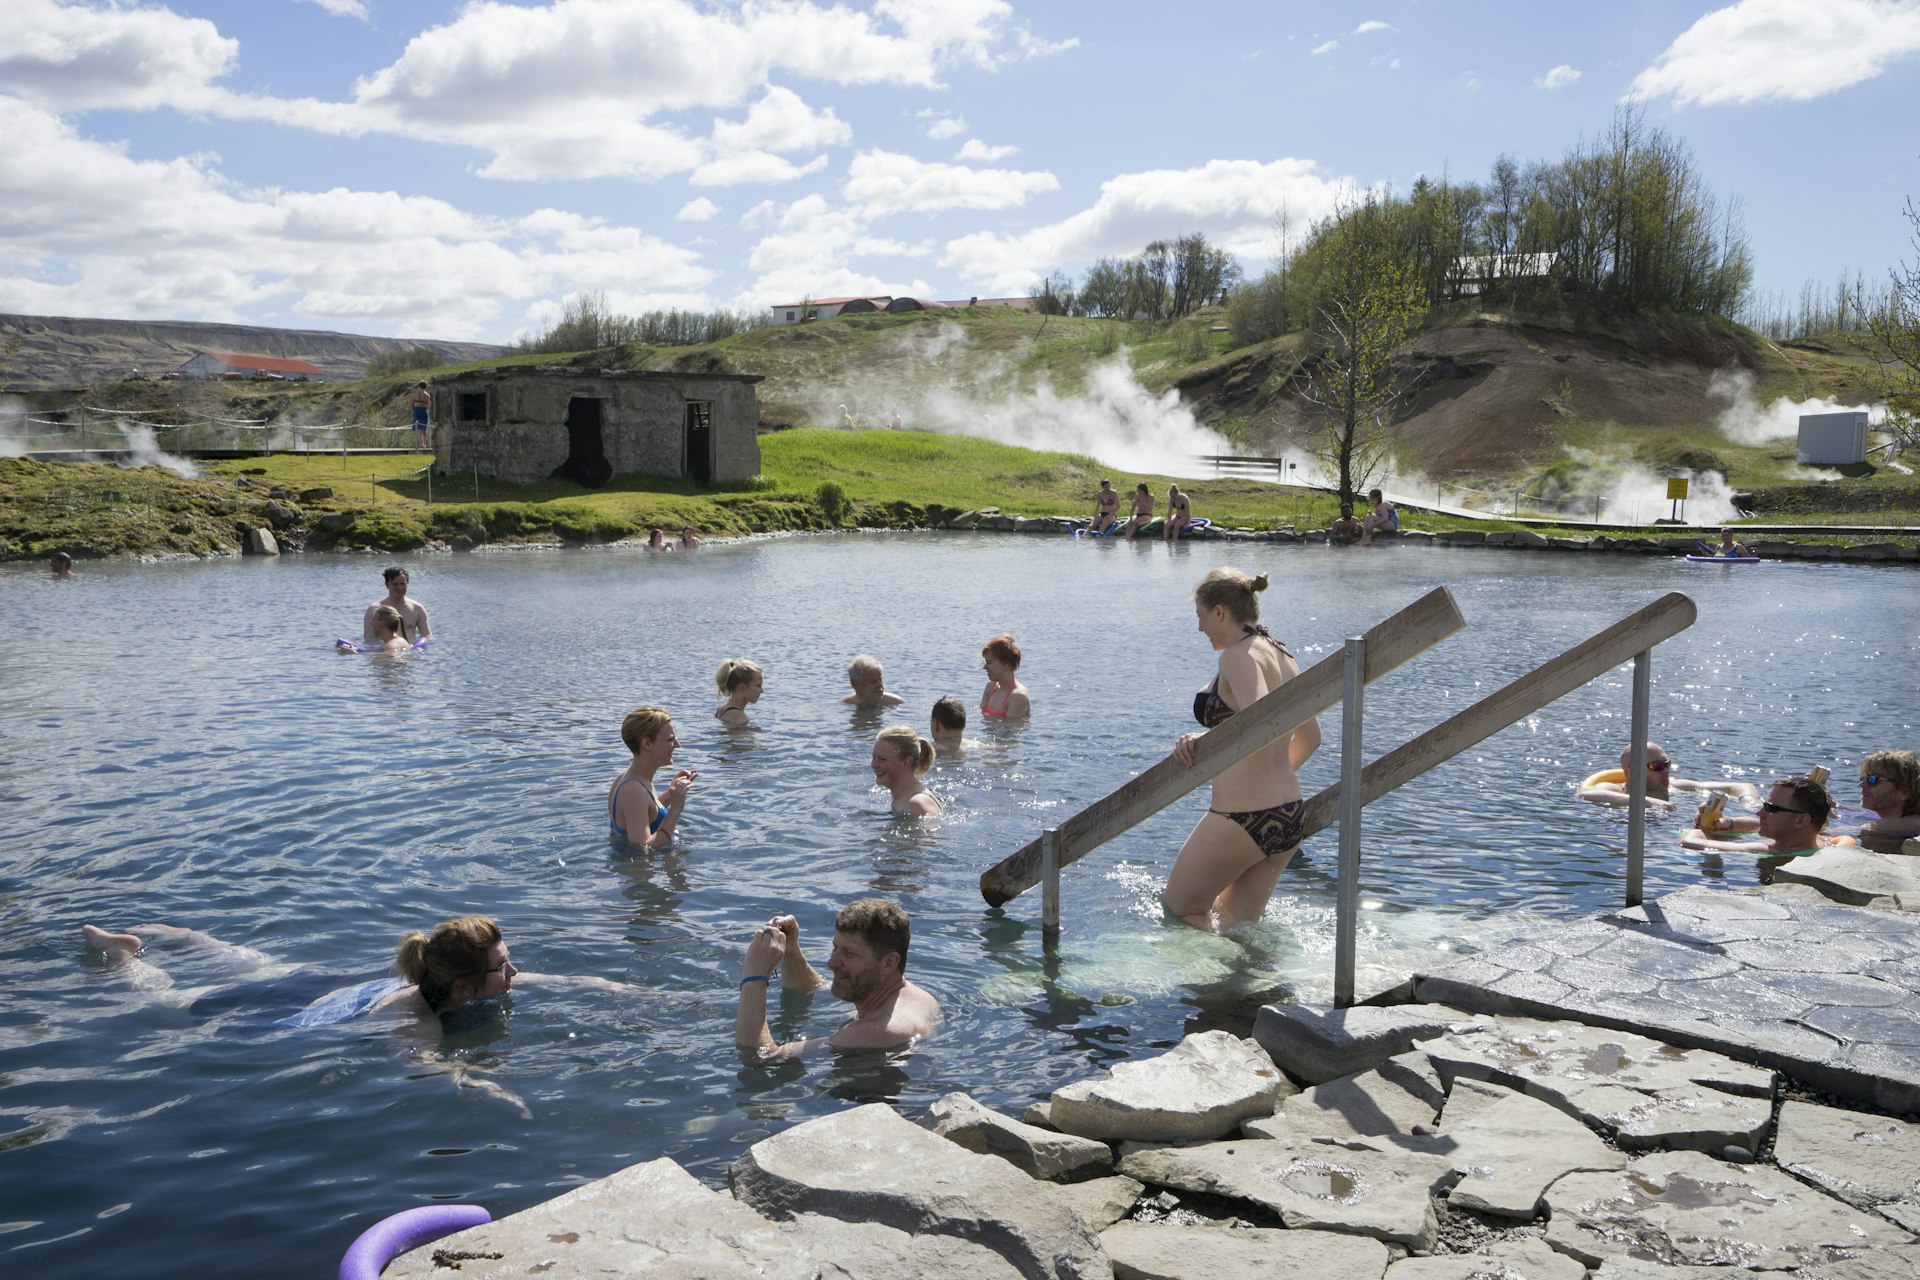 People enjoying a soak in some hot springs